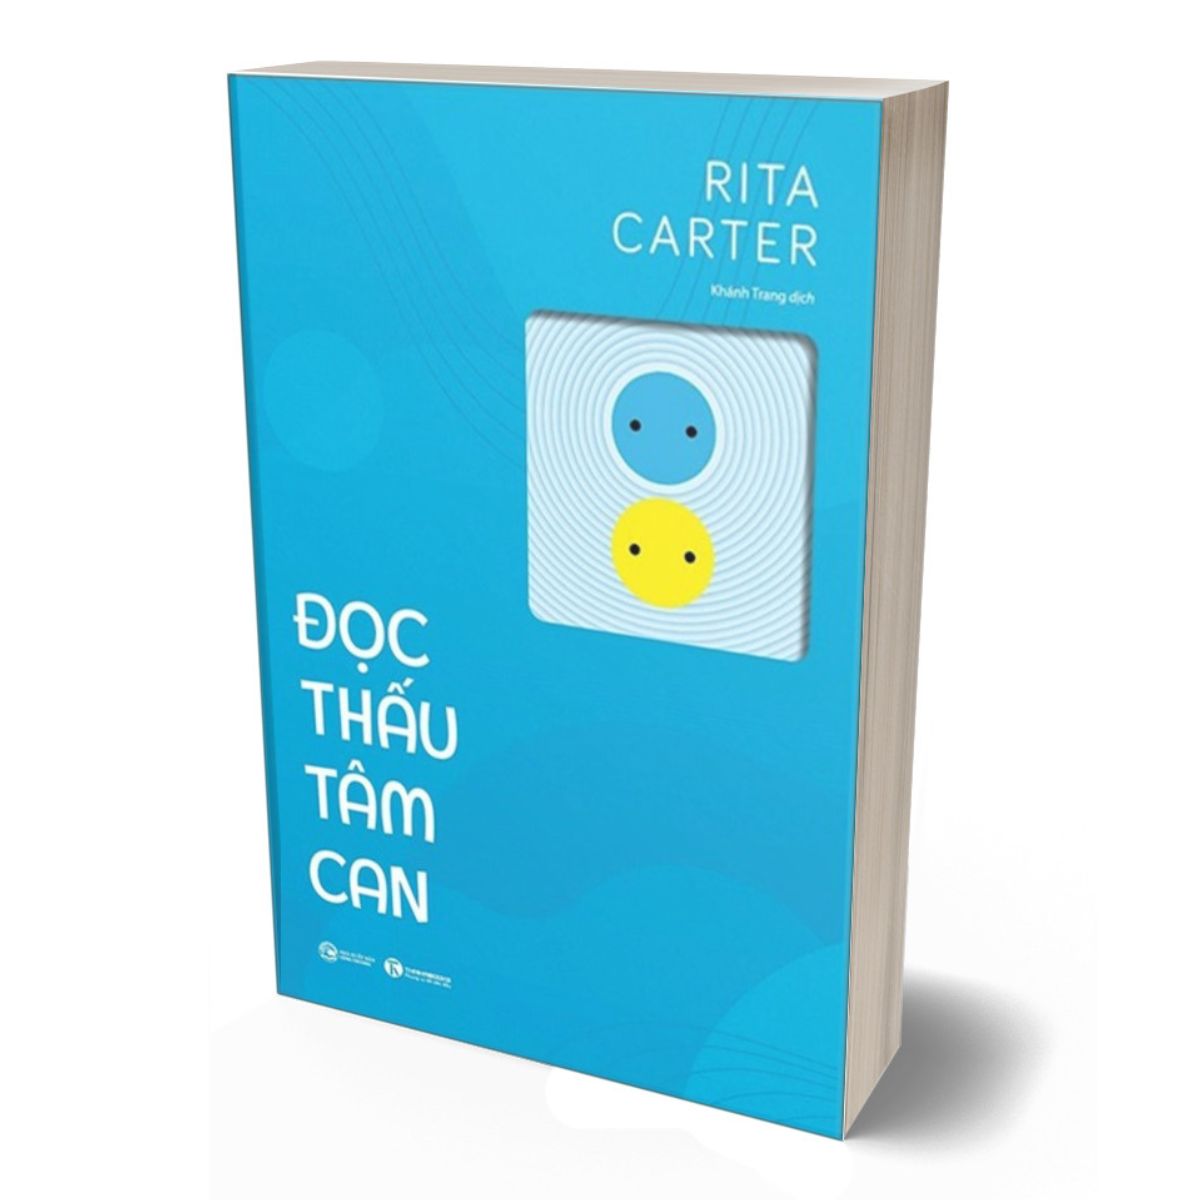 Đọc Thấu Tâm Can - Rita Carter